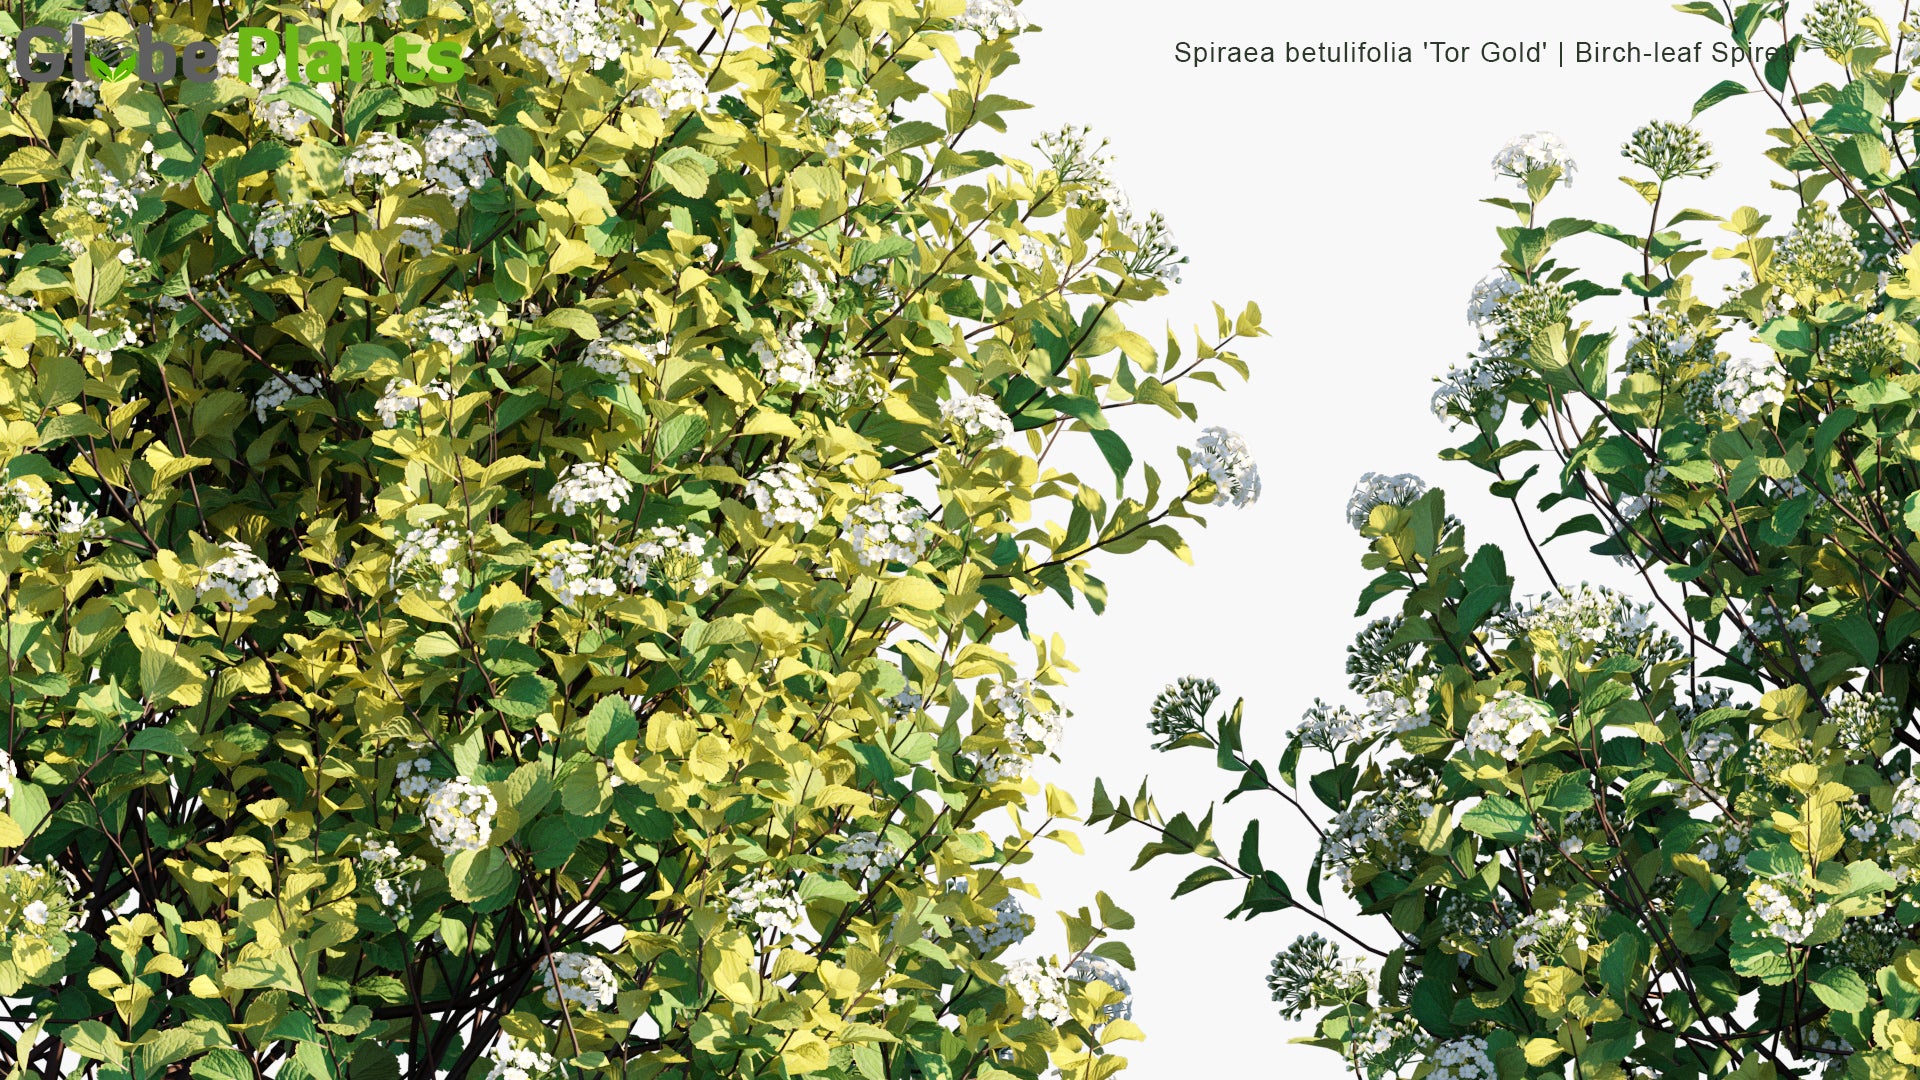 Spiraea Betulifolia 'Tor Gold' - Birch-Leaf Spirea, Glow Girl